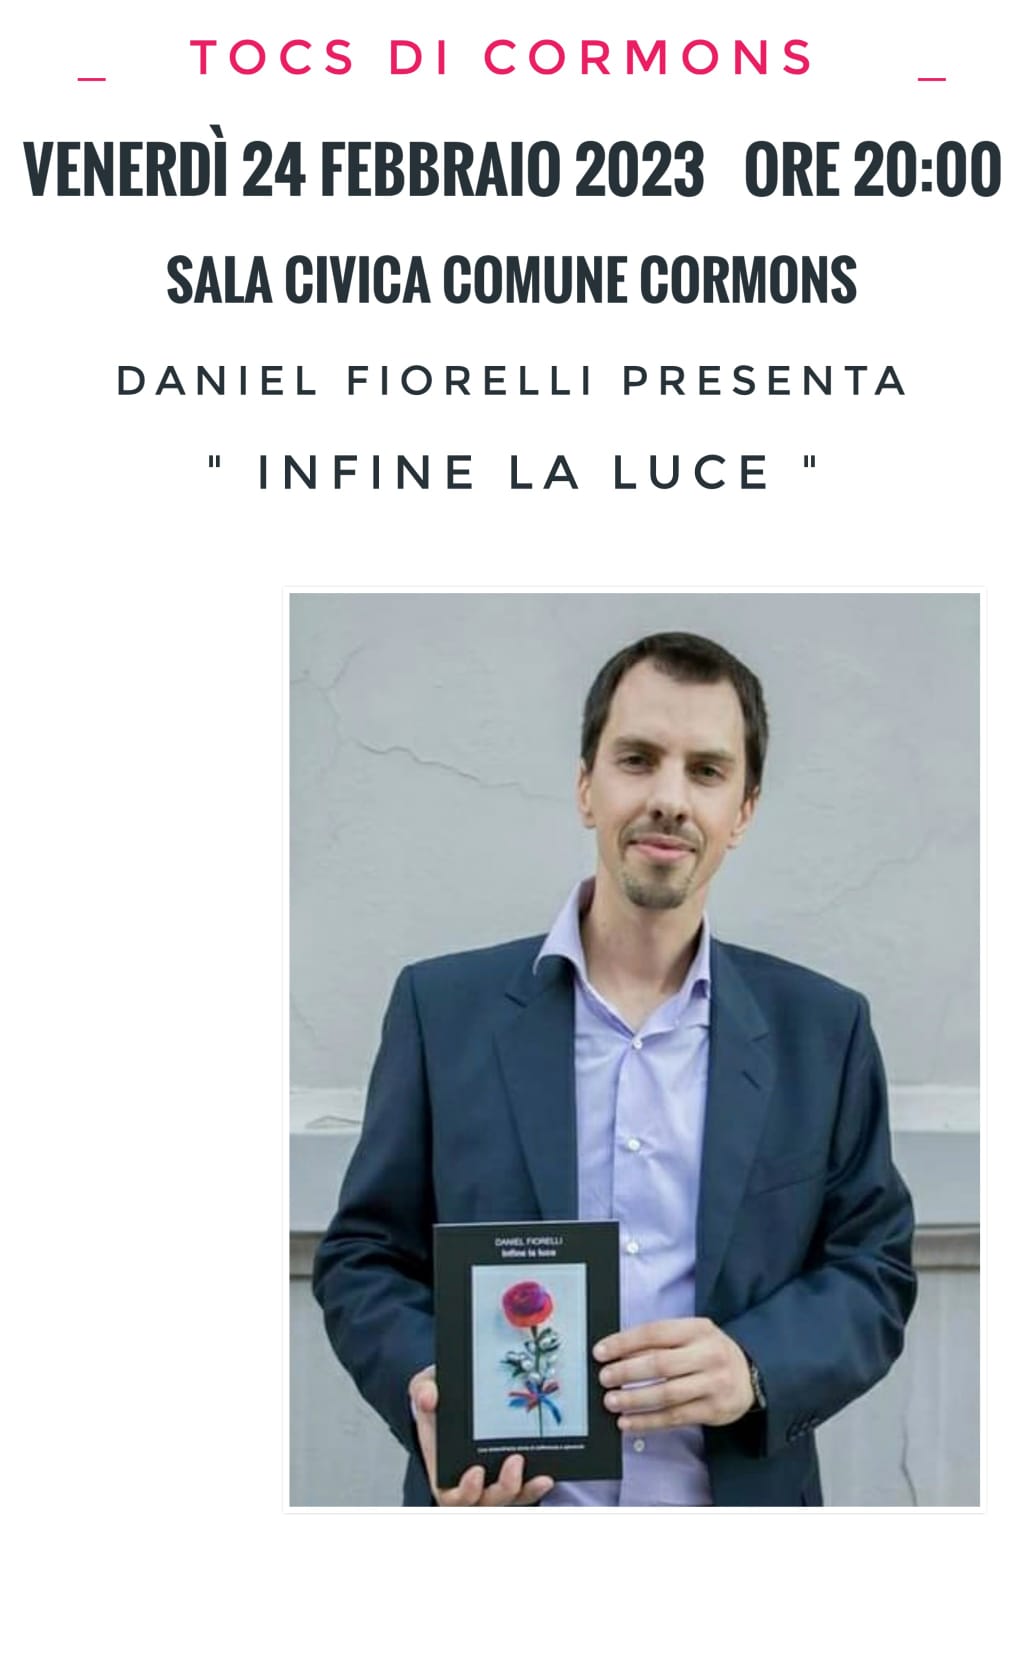 Daniel Fiorelli - Infine la Luce